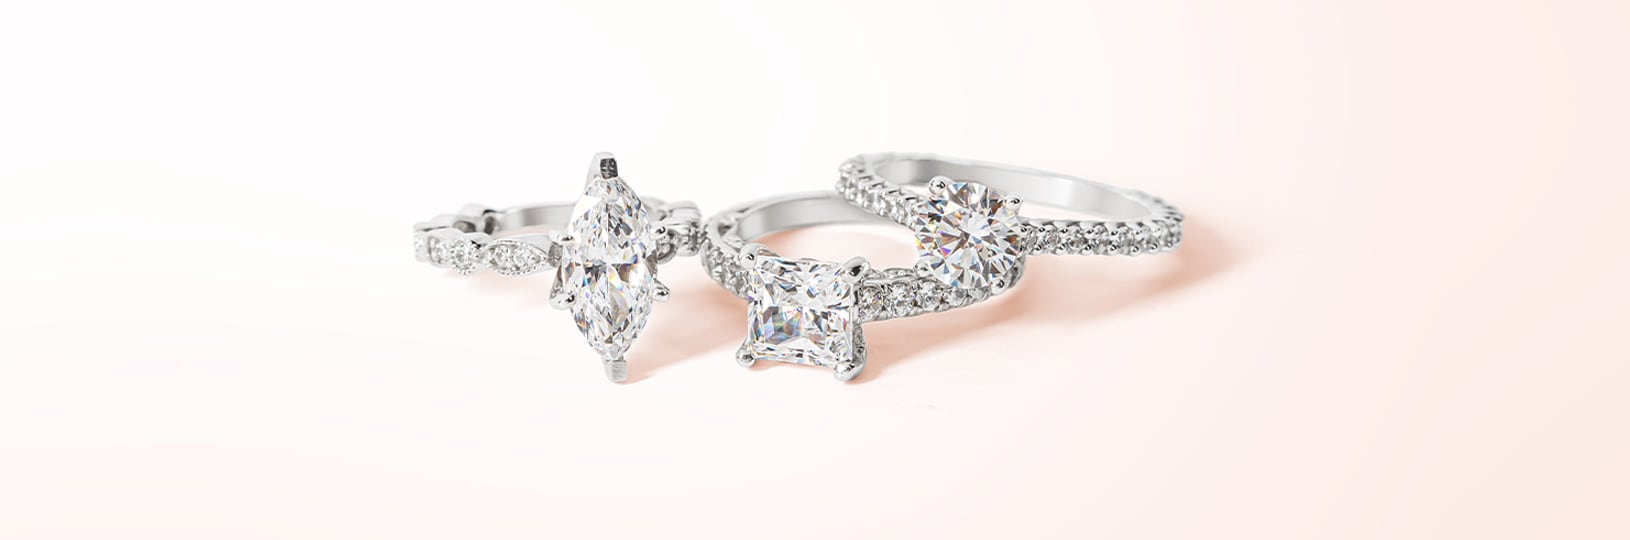 sustainable engagement rings - 1215 diamonds